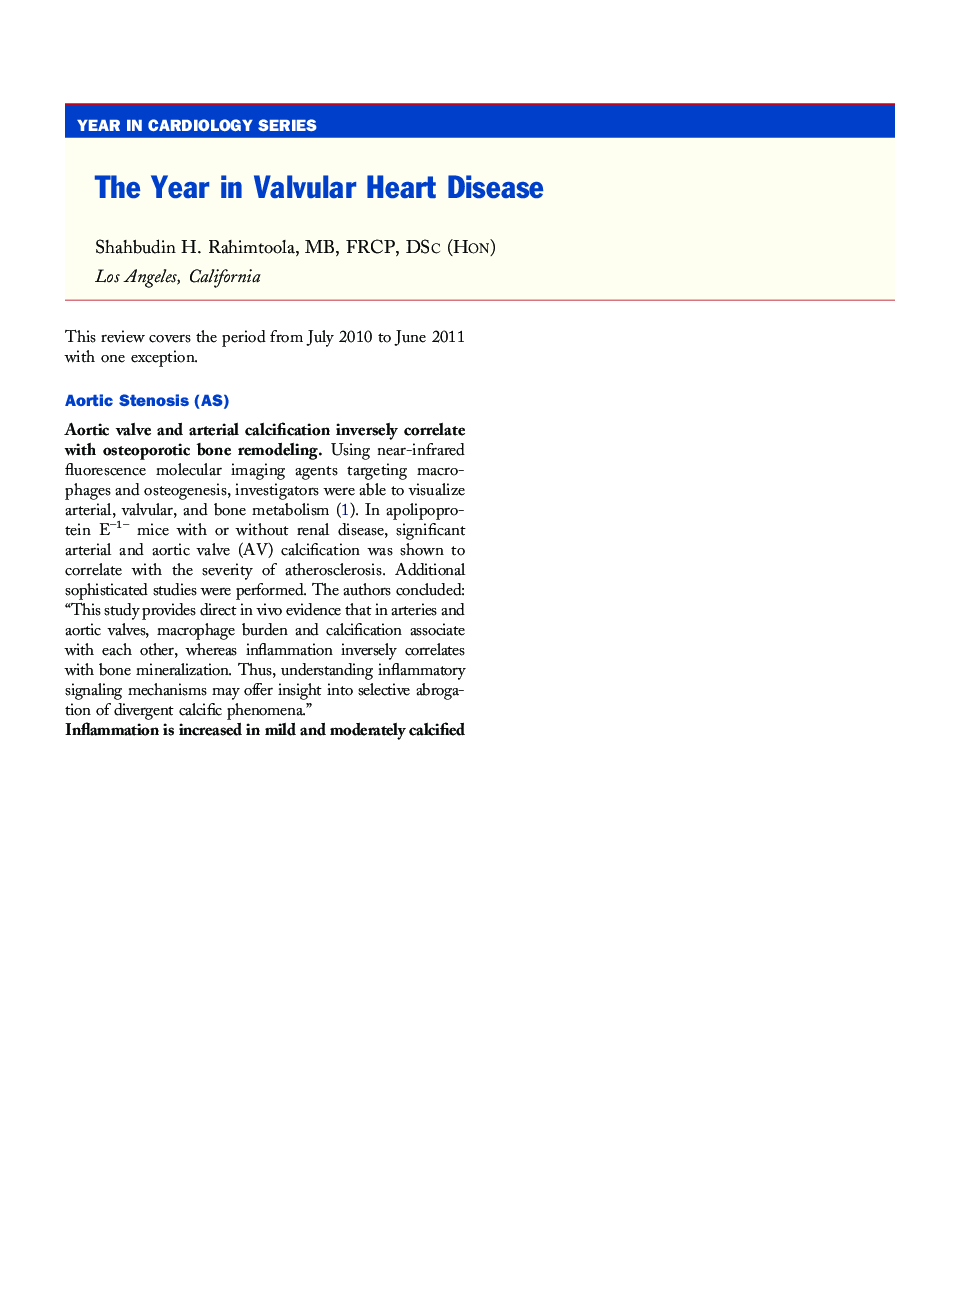 The Year in Valvular Heart Disease